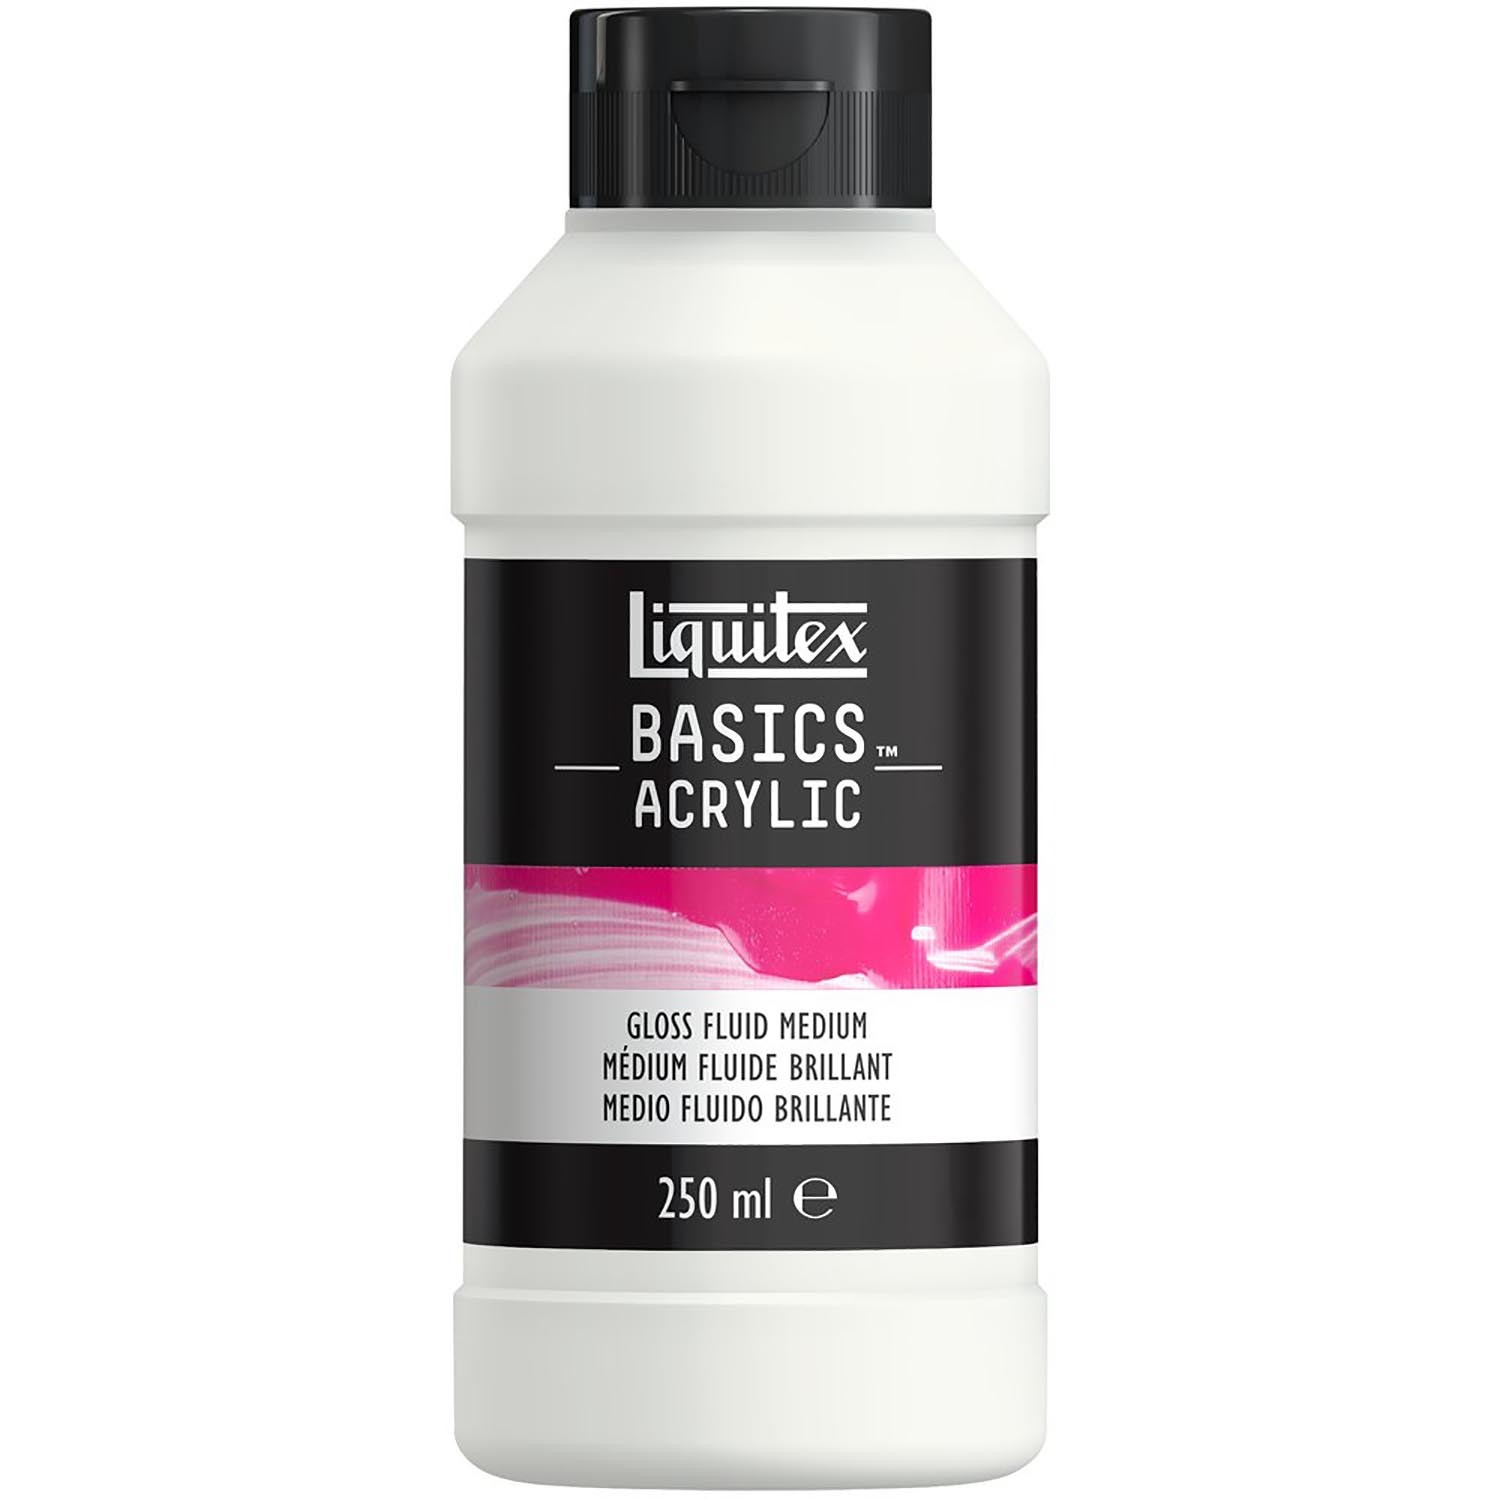 Liquitex Basics Acrylic Gloss Fluid Medium 250ml Image